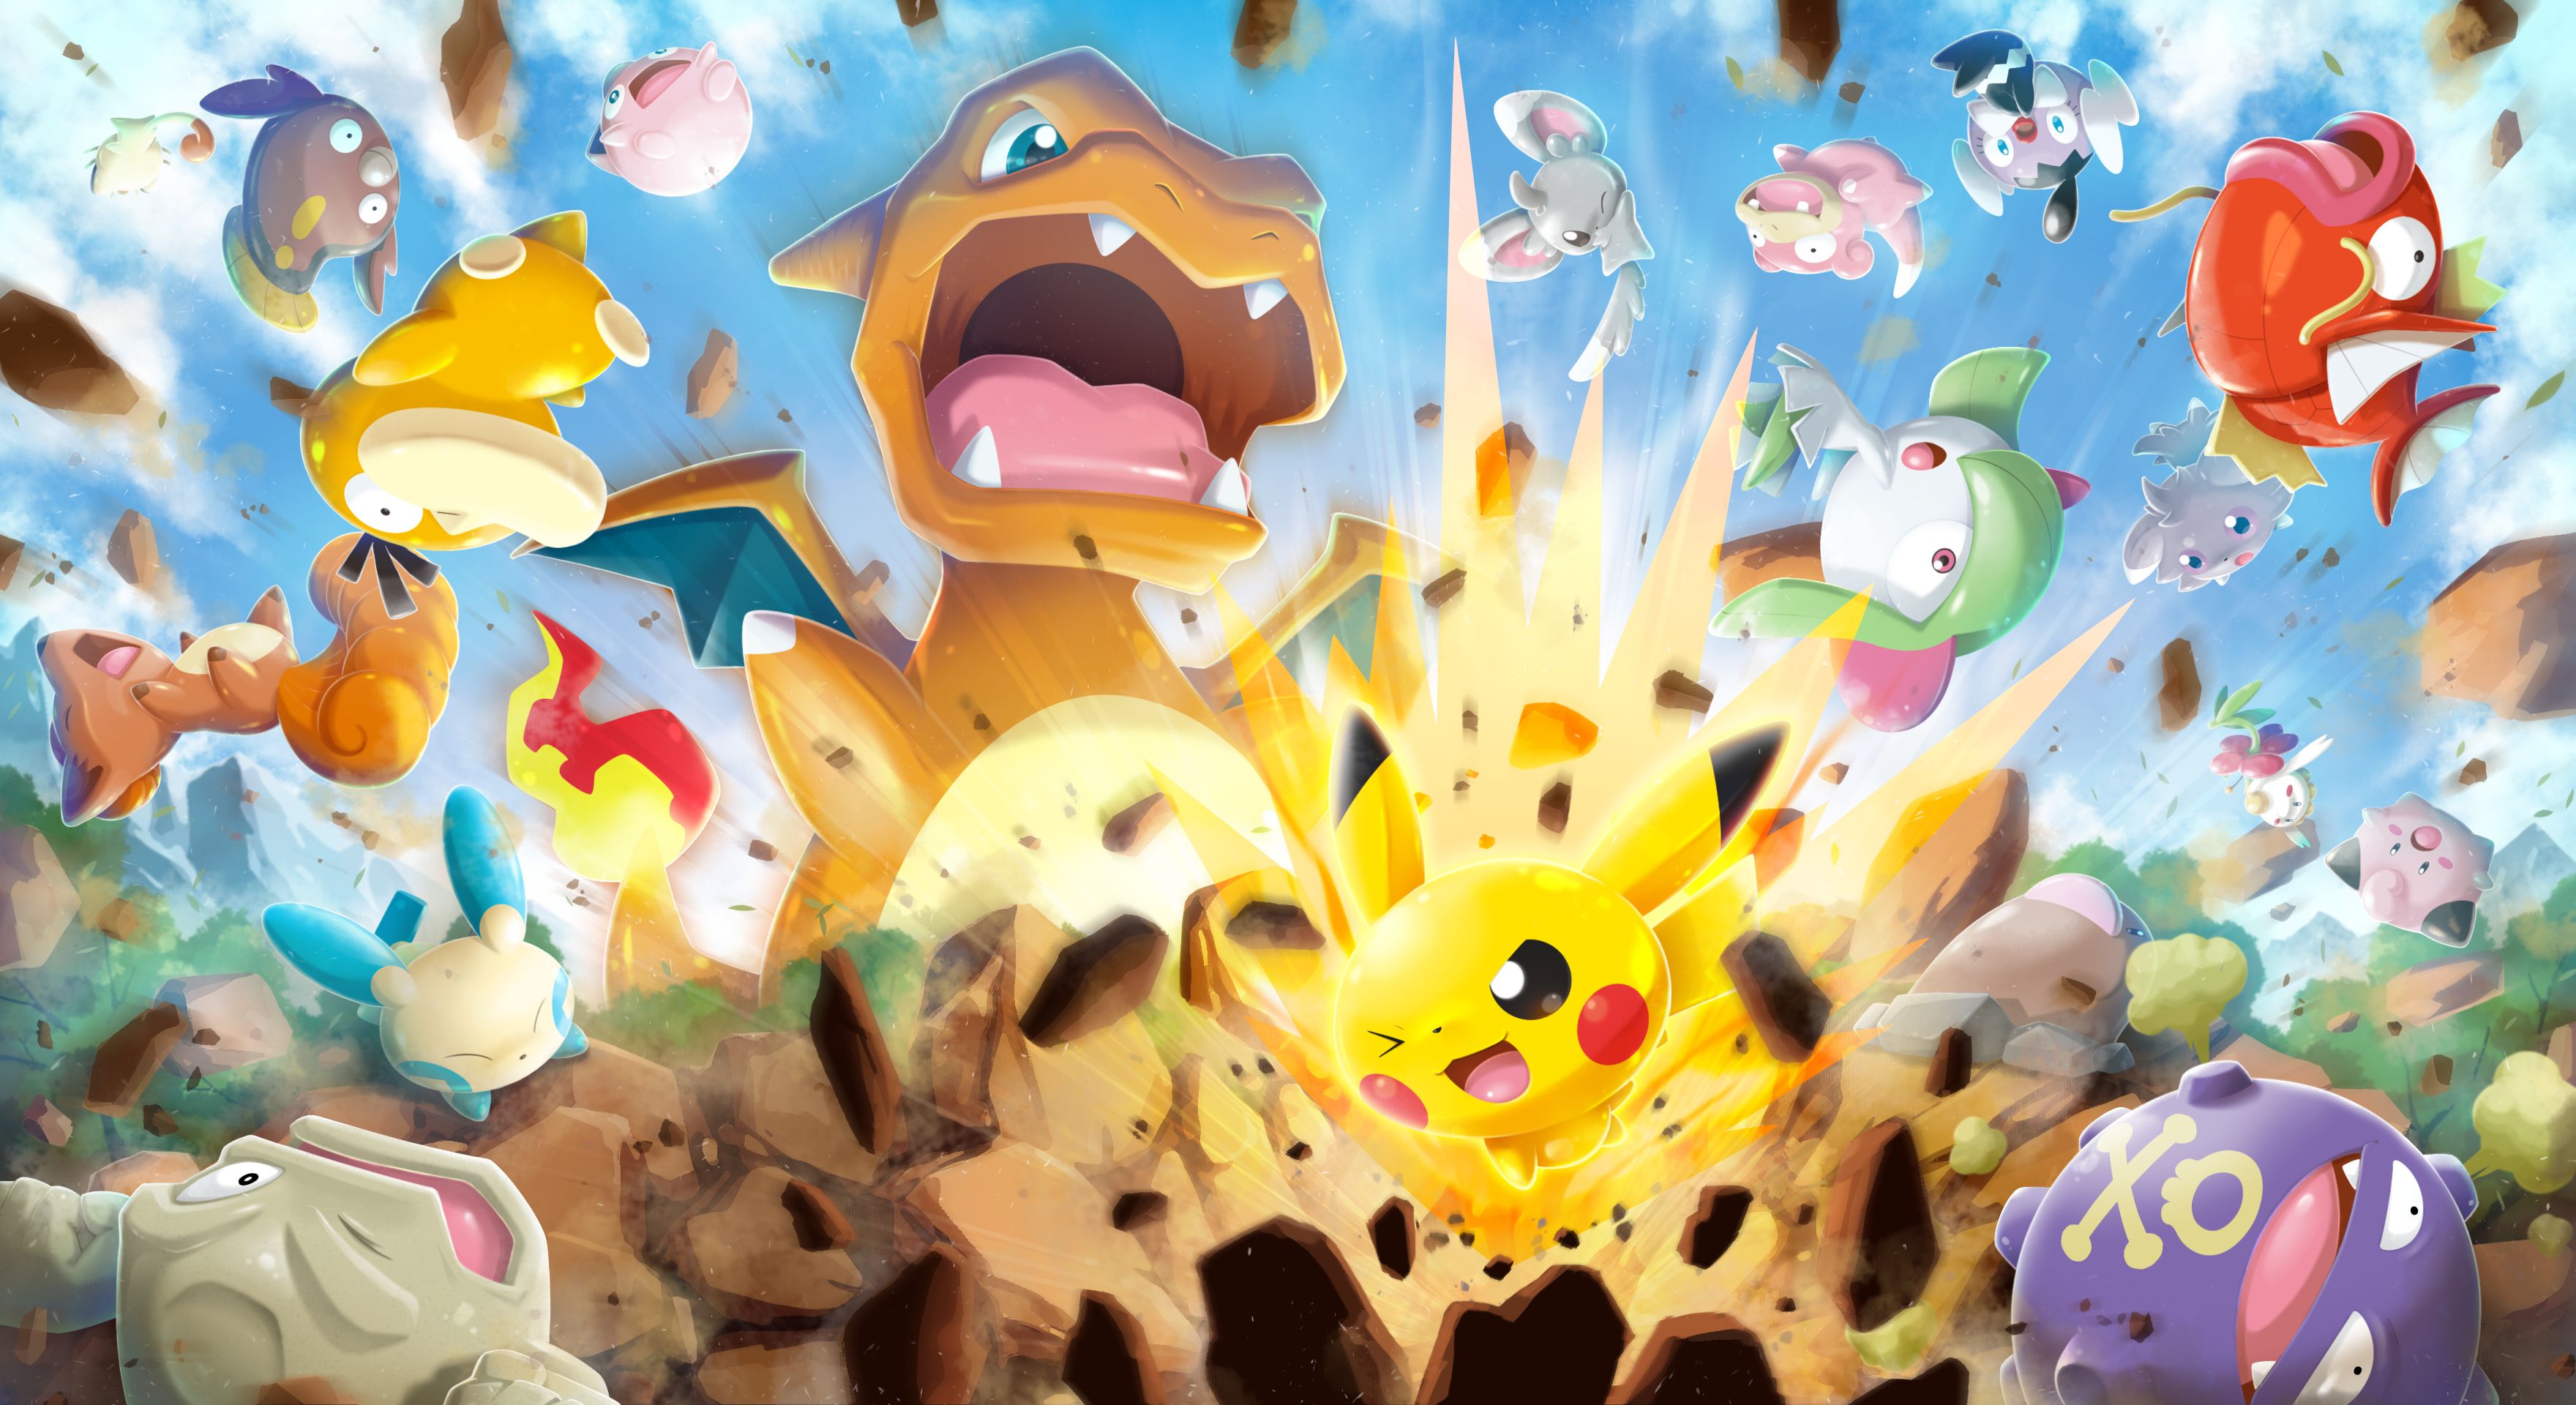 Imagen de pokemon, wallpaper, and background  Pokemon backgrounds, Pokemon,  Pokemon jigglypuff